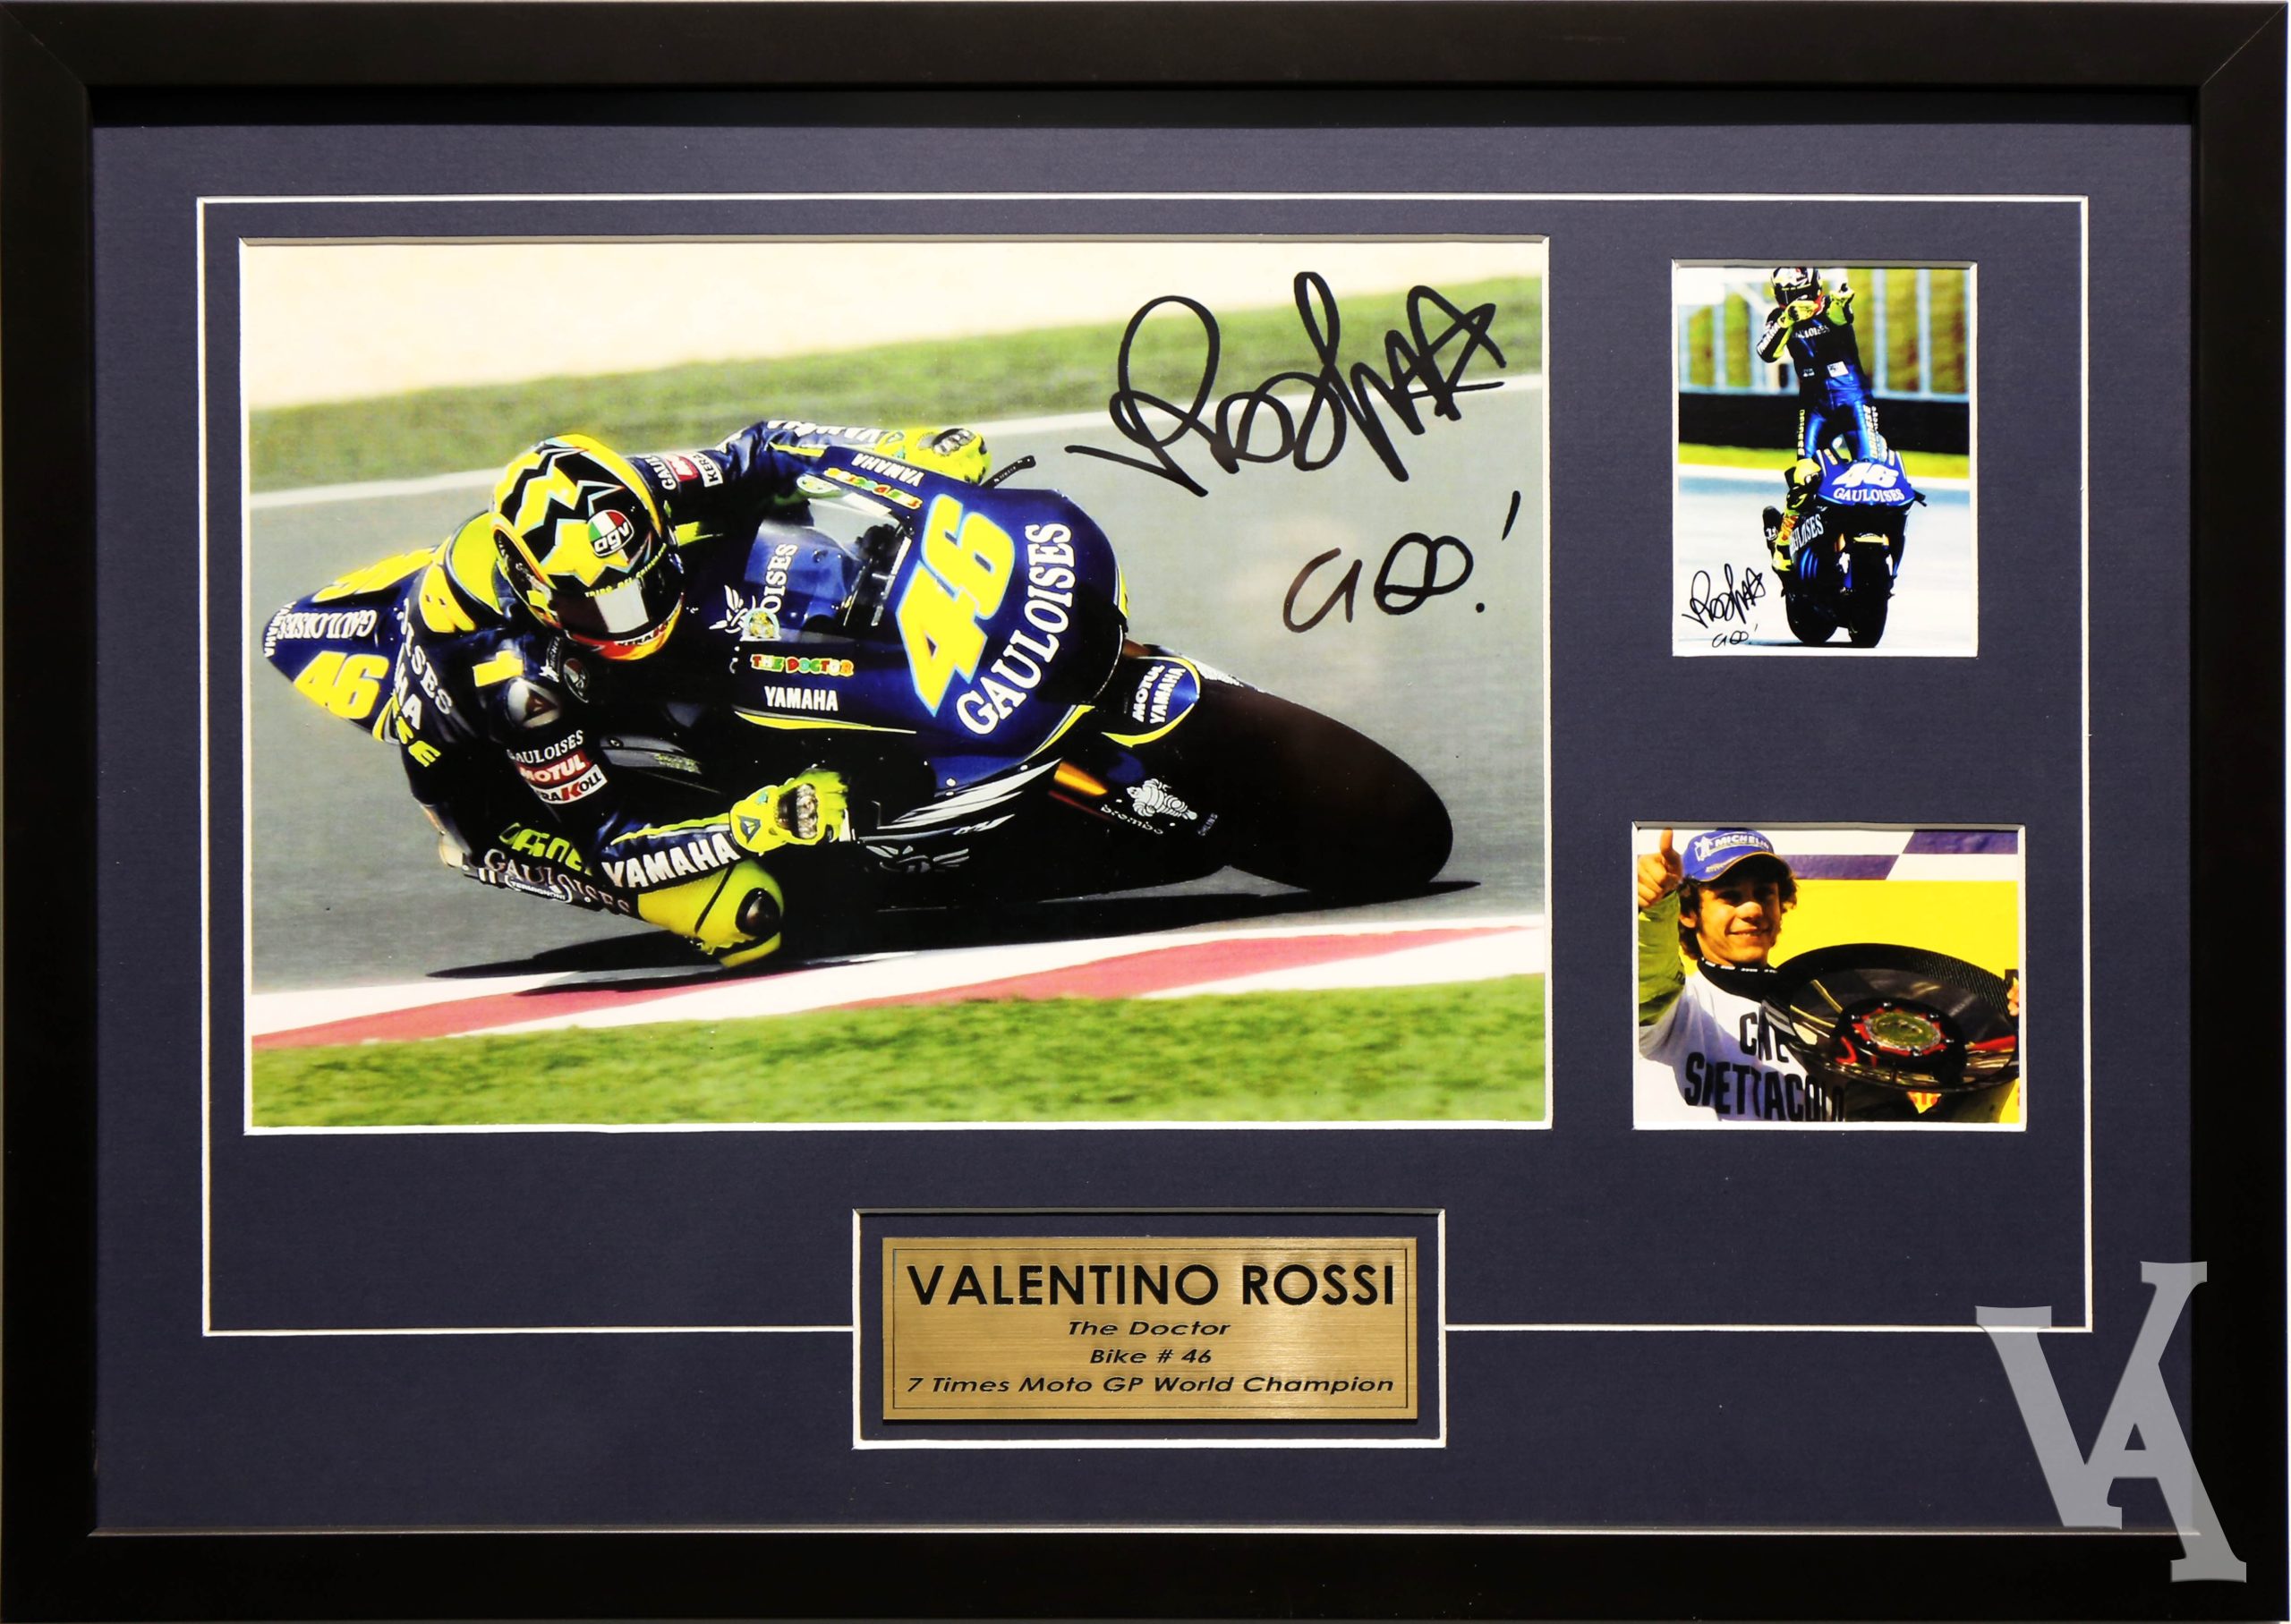 Valentino Rossi Signed & Framed Moto GP Racing Memorabilia. Valentino Rossi Team Yamaha "The Doctor" Moto GP World Champion.